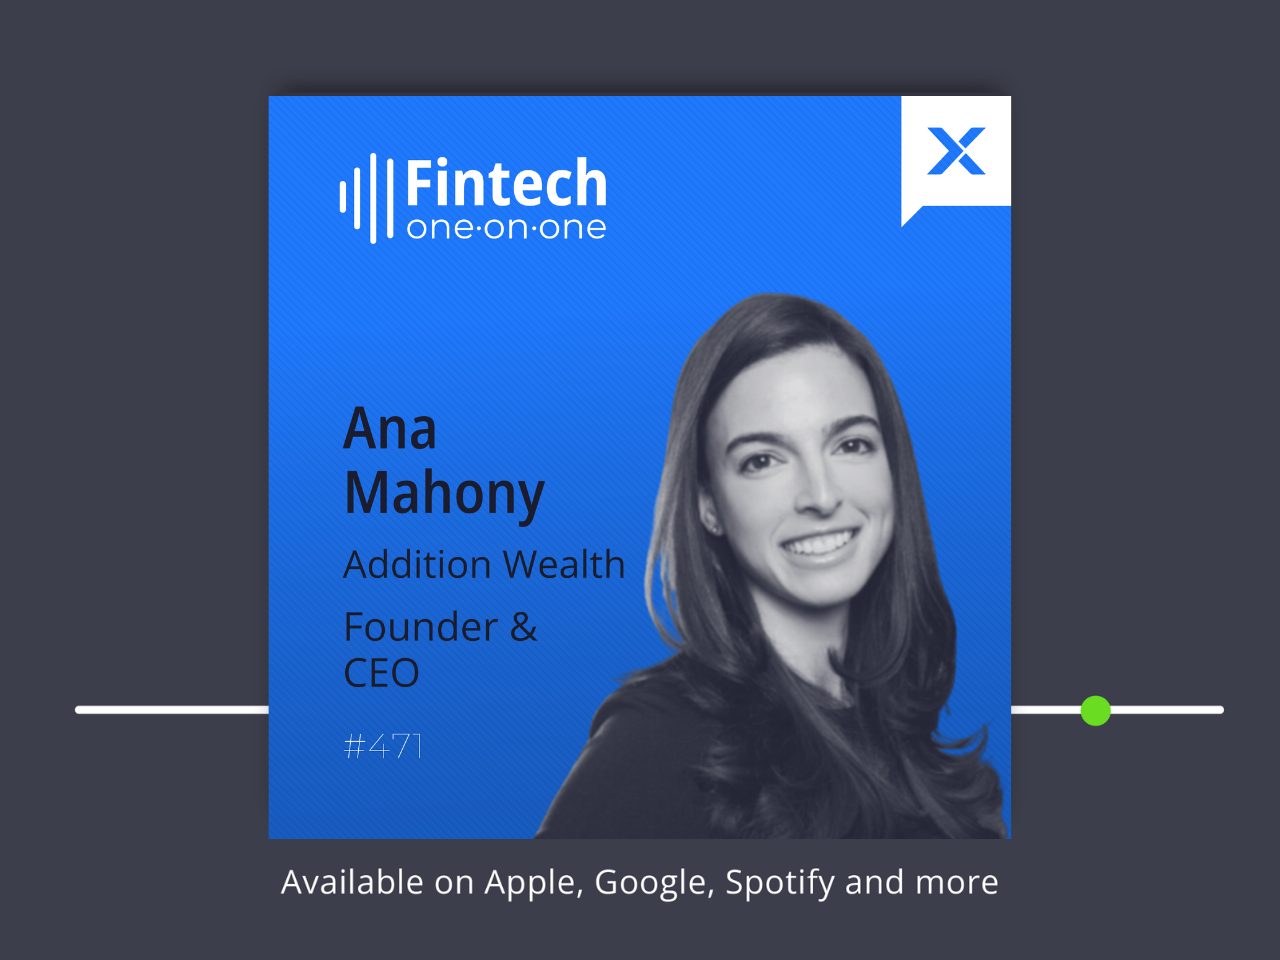 Ana Mahony, Founder & CEO, Addition Wealth